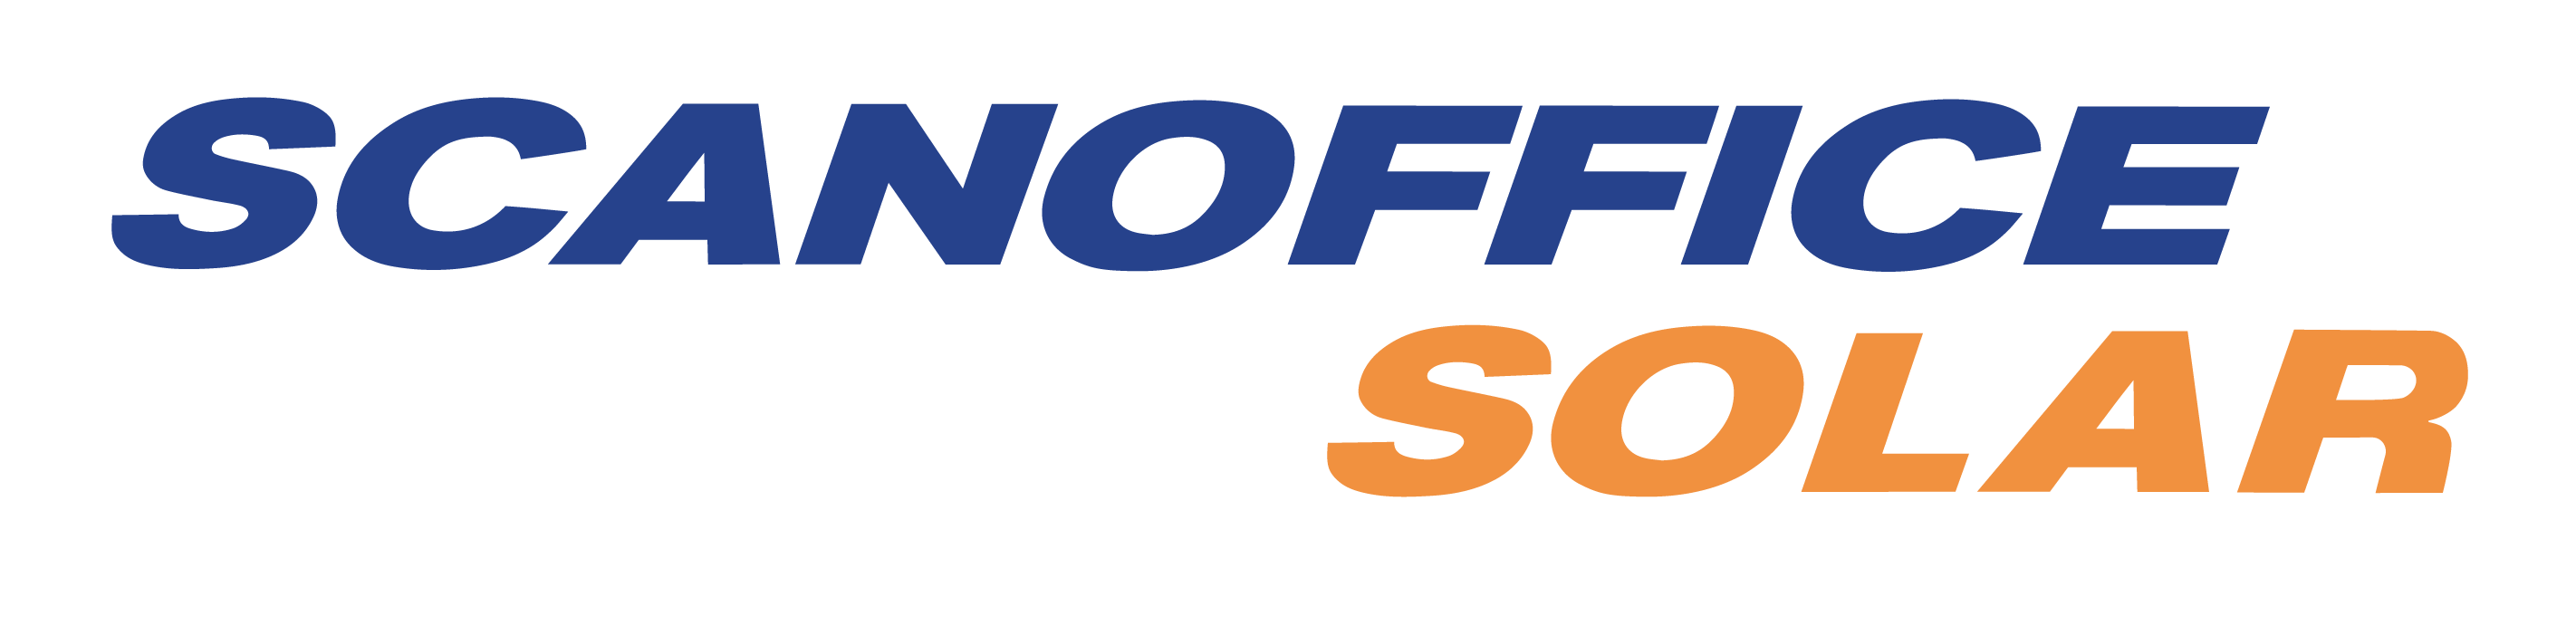 Scanoffice Solar logo